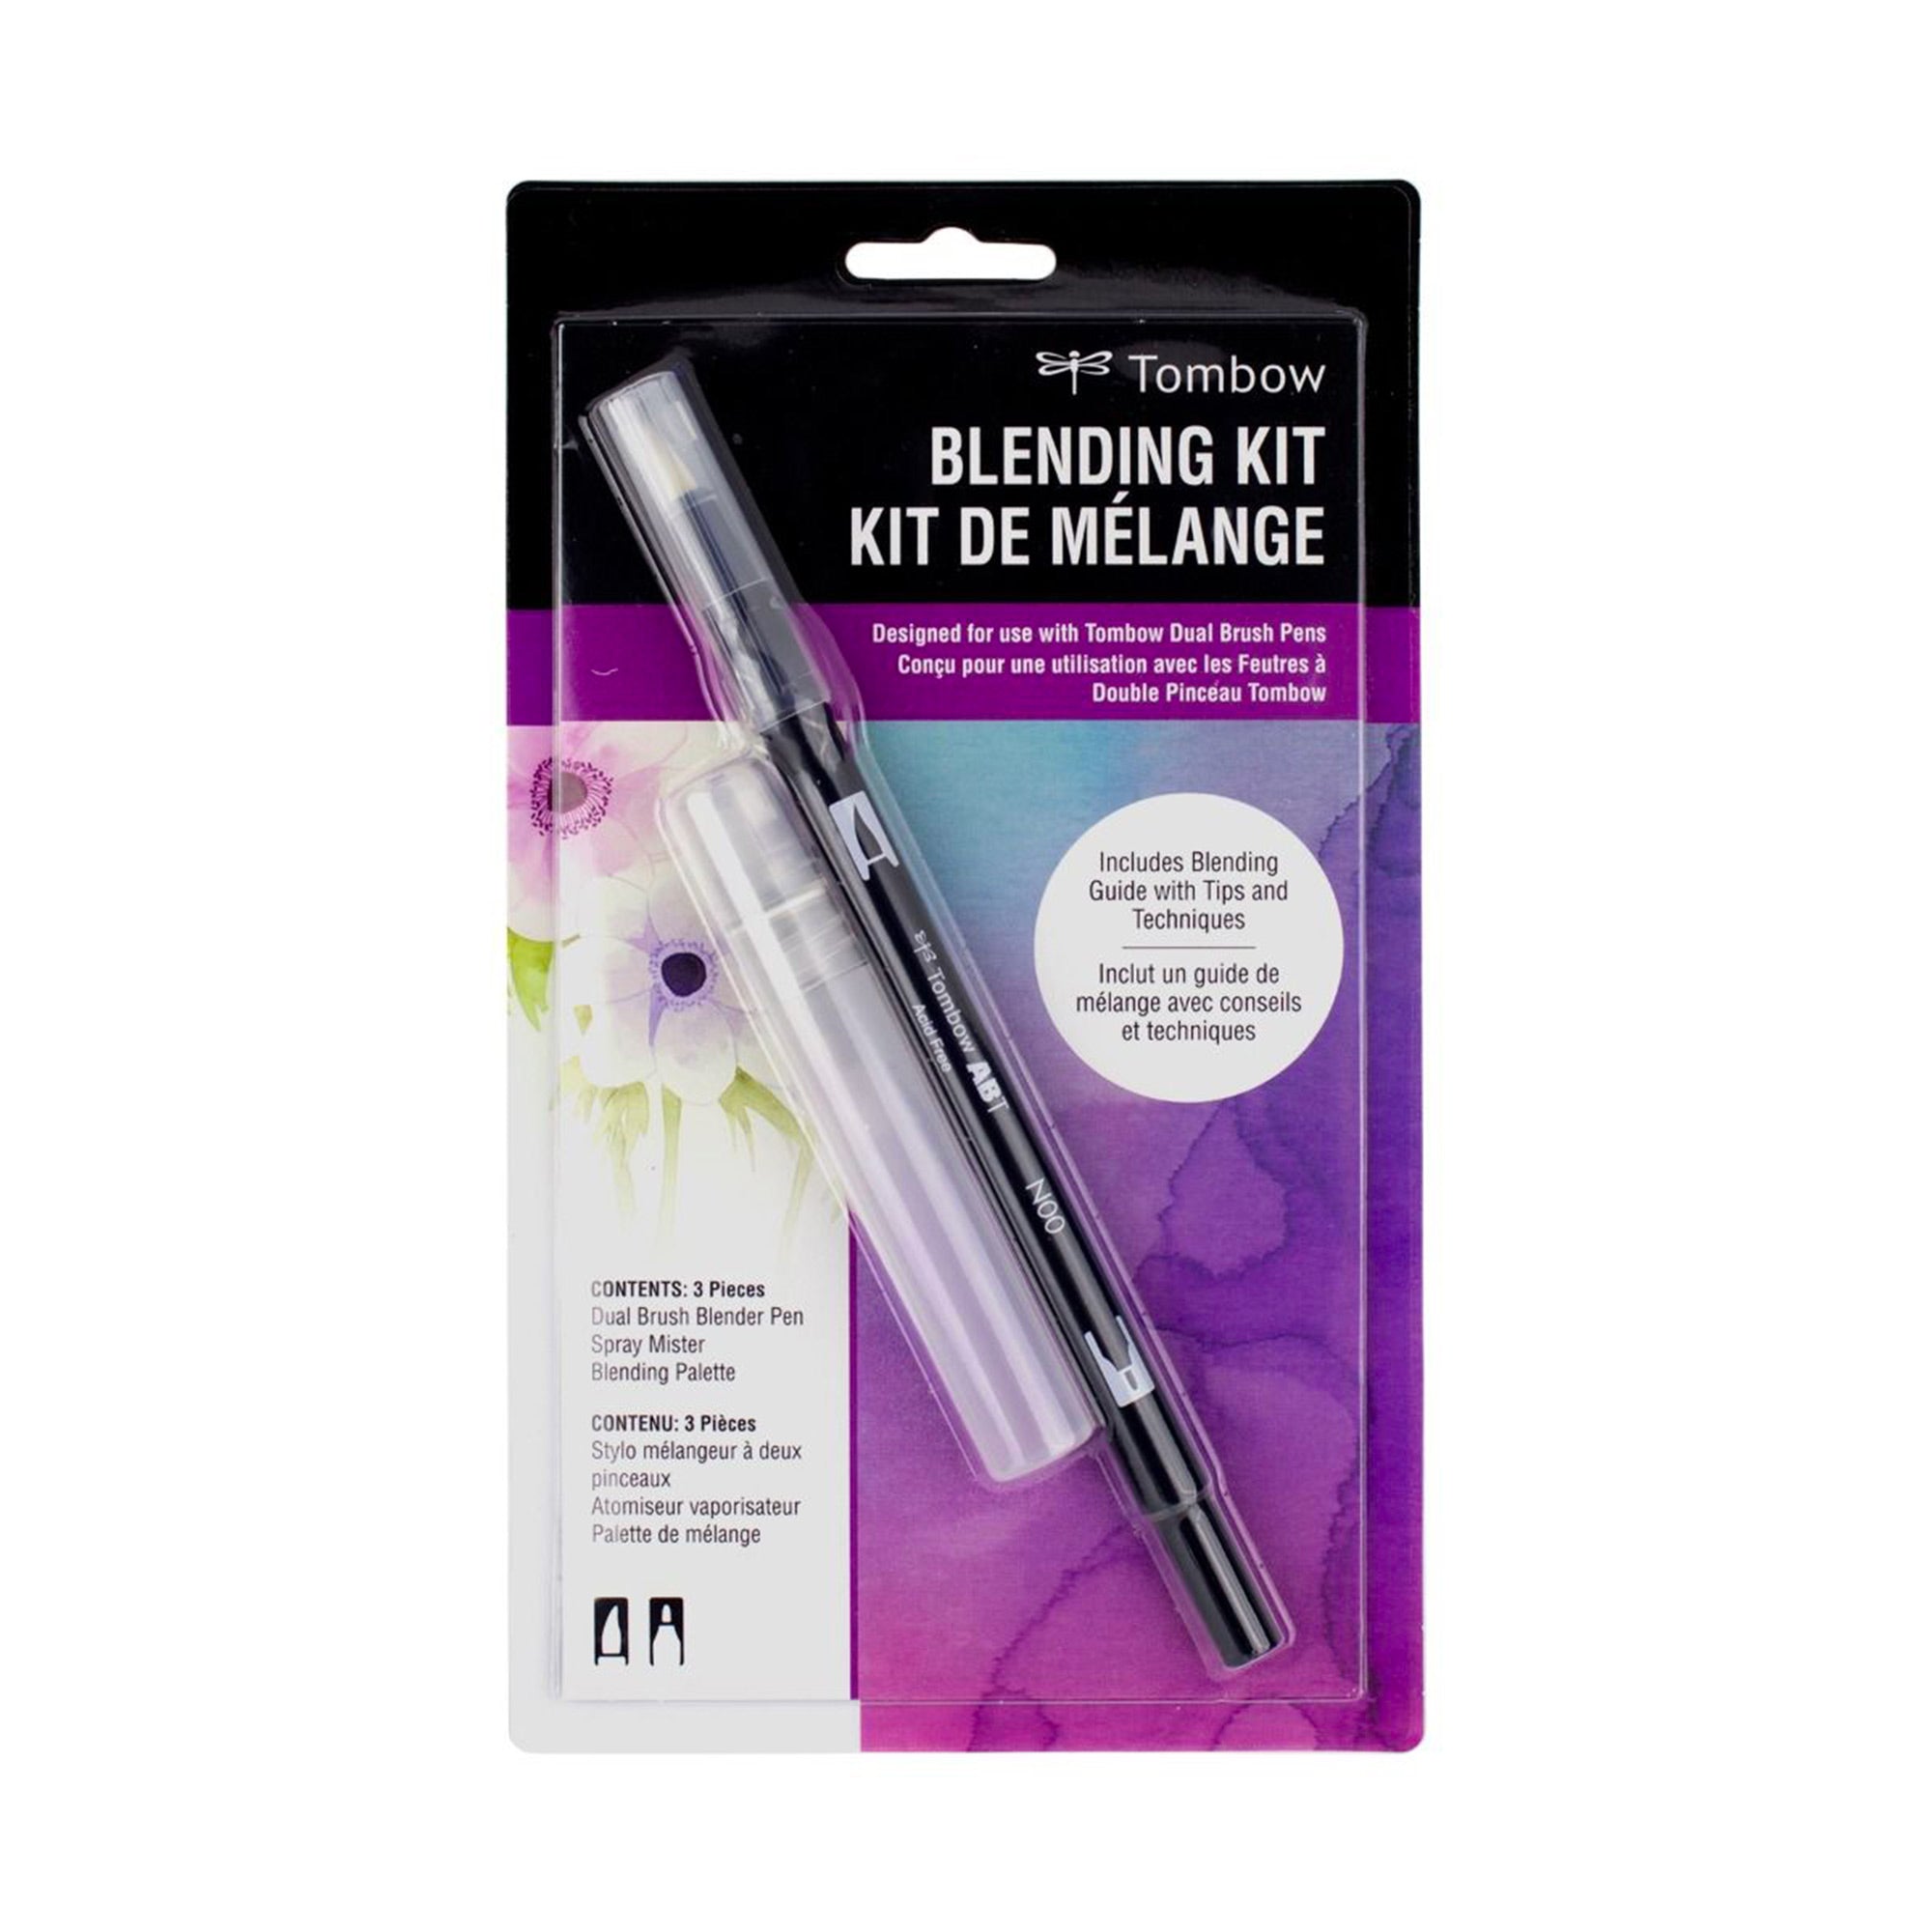 Tombow Dual Brush Pen Set of 108 Colors w/ Marker Case (Tri-Fold Holder)